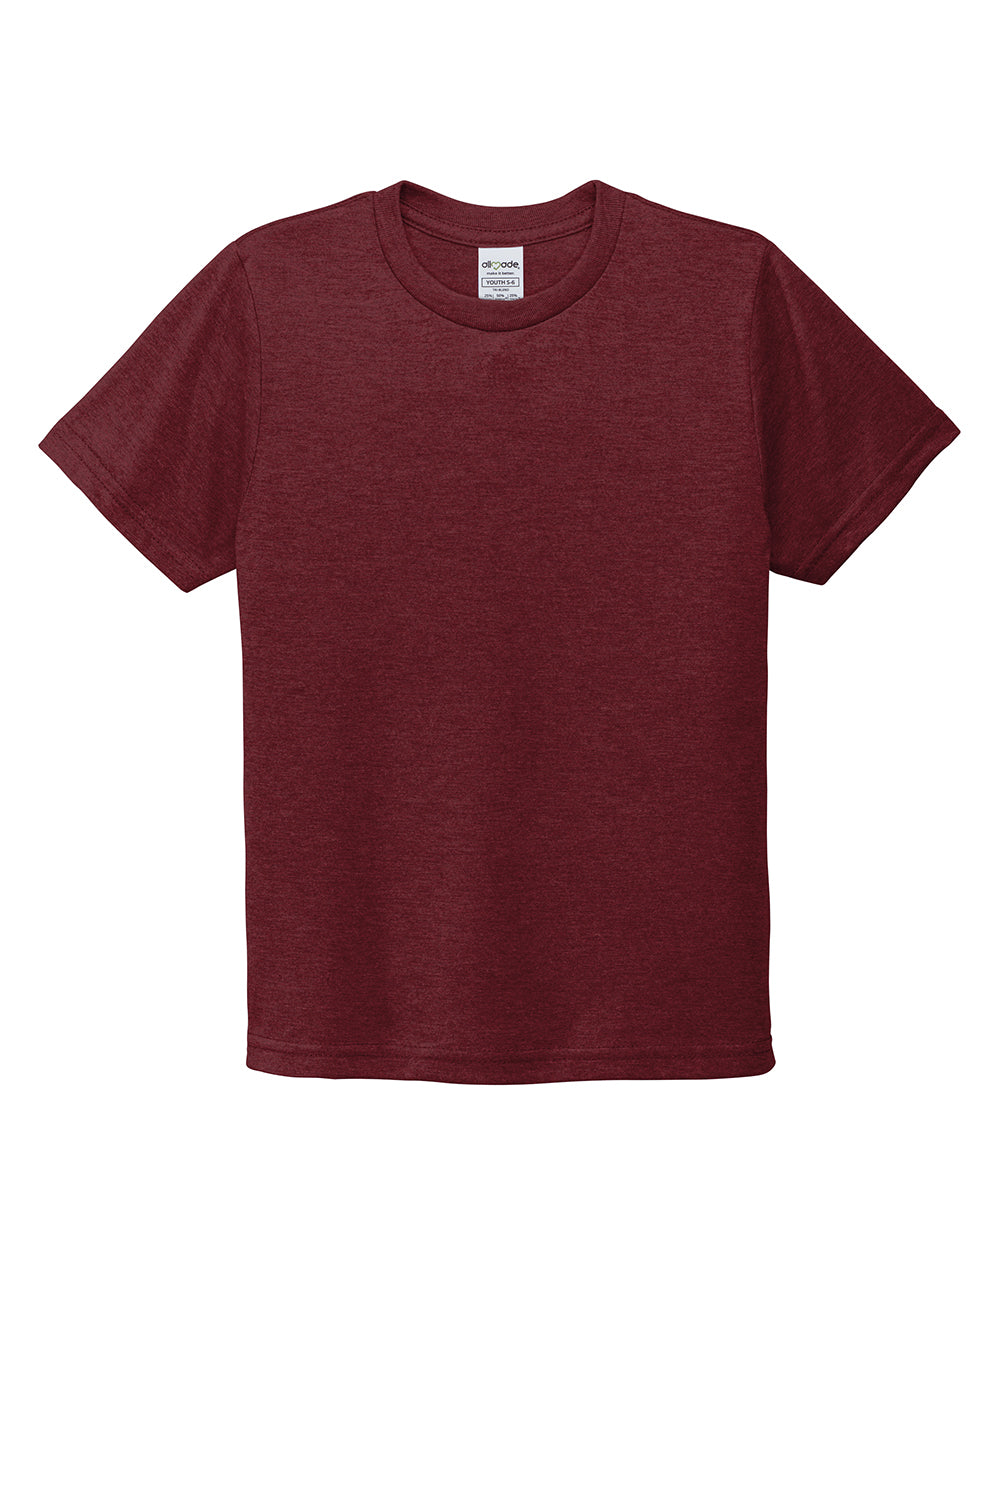 Allmade AL207 Youth Short Sleeve Crewneck T-Shirt Vino Red Flat Front